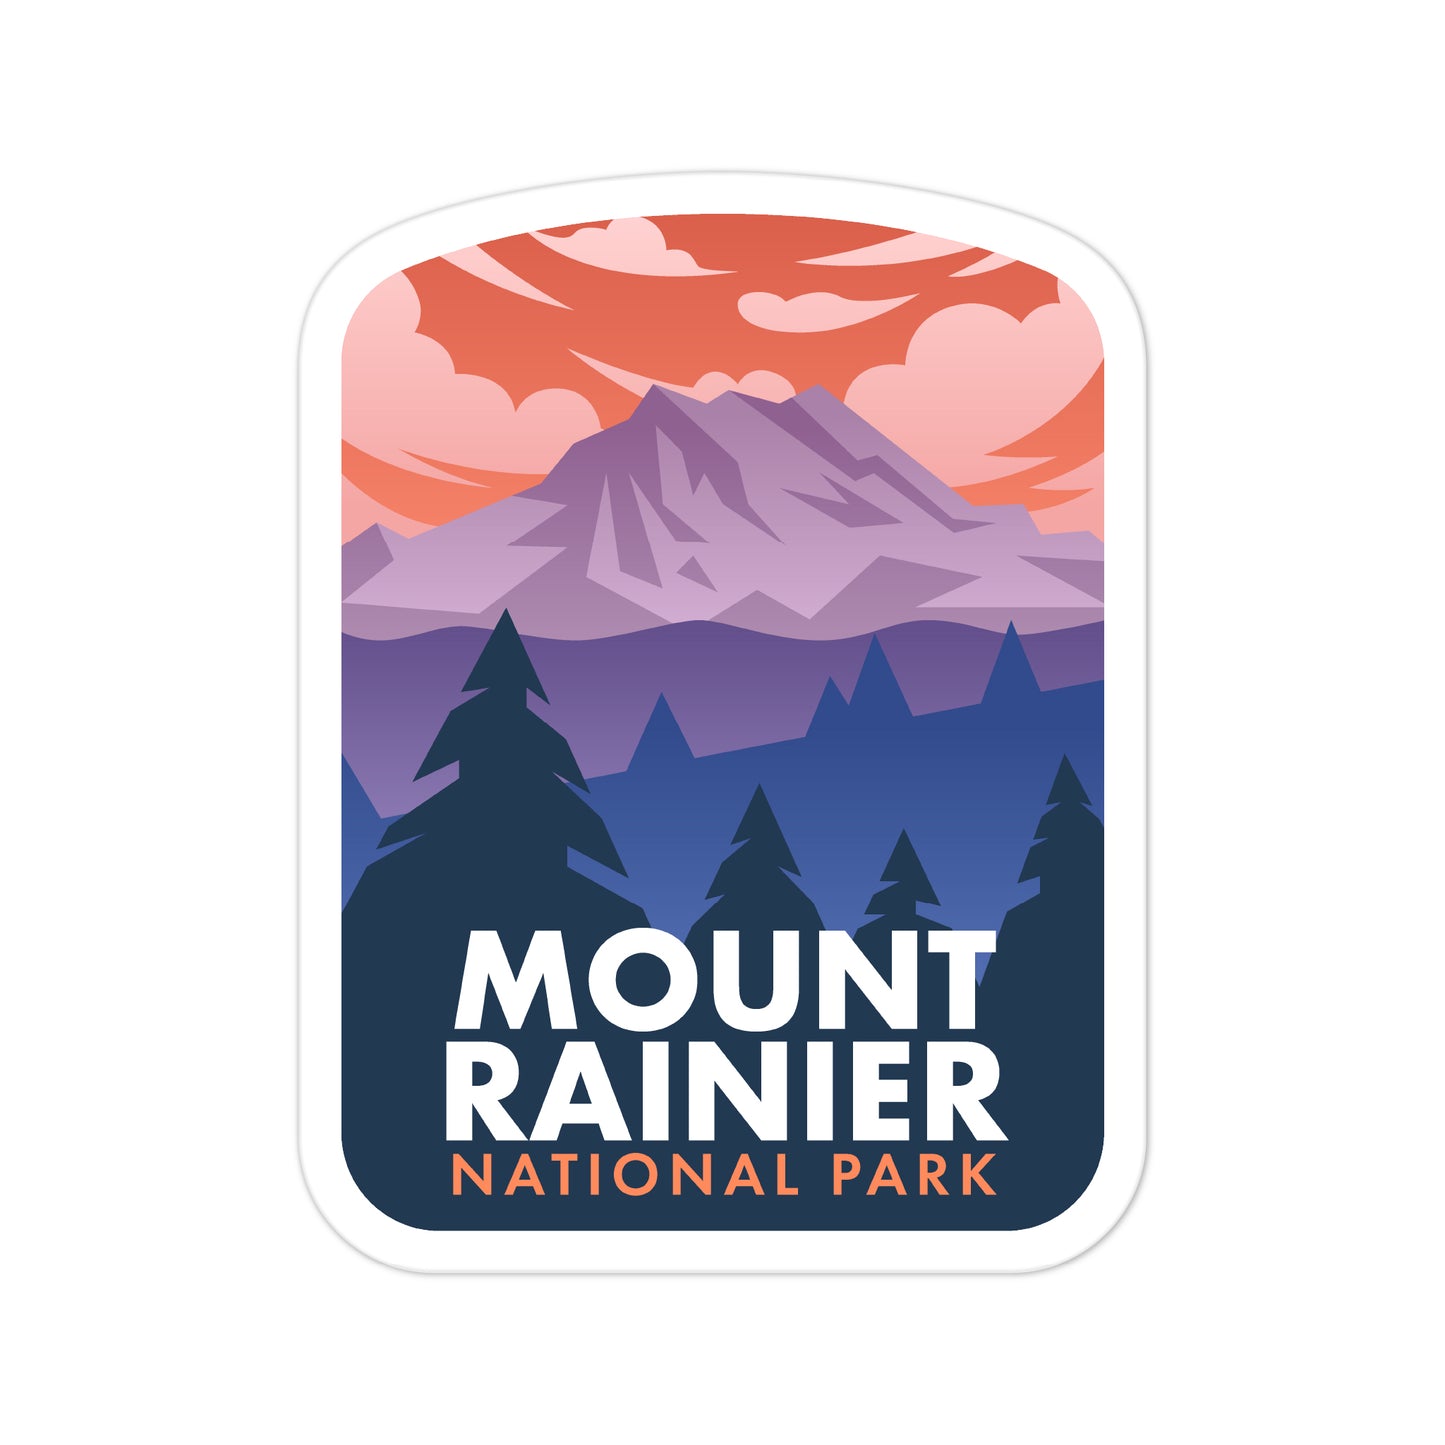 A sticker of Mount Rainier National Park